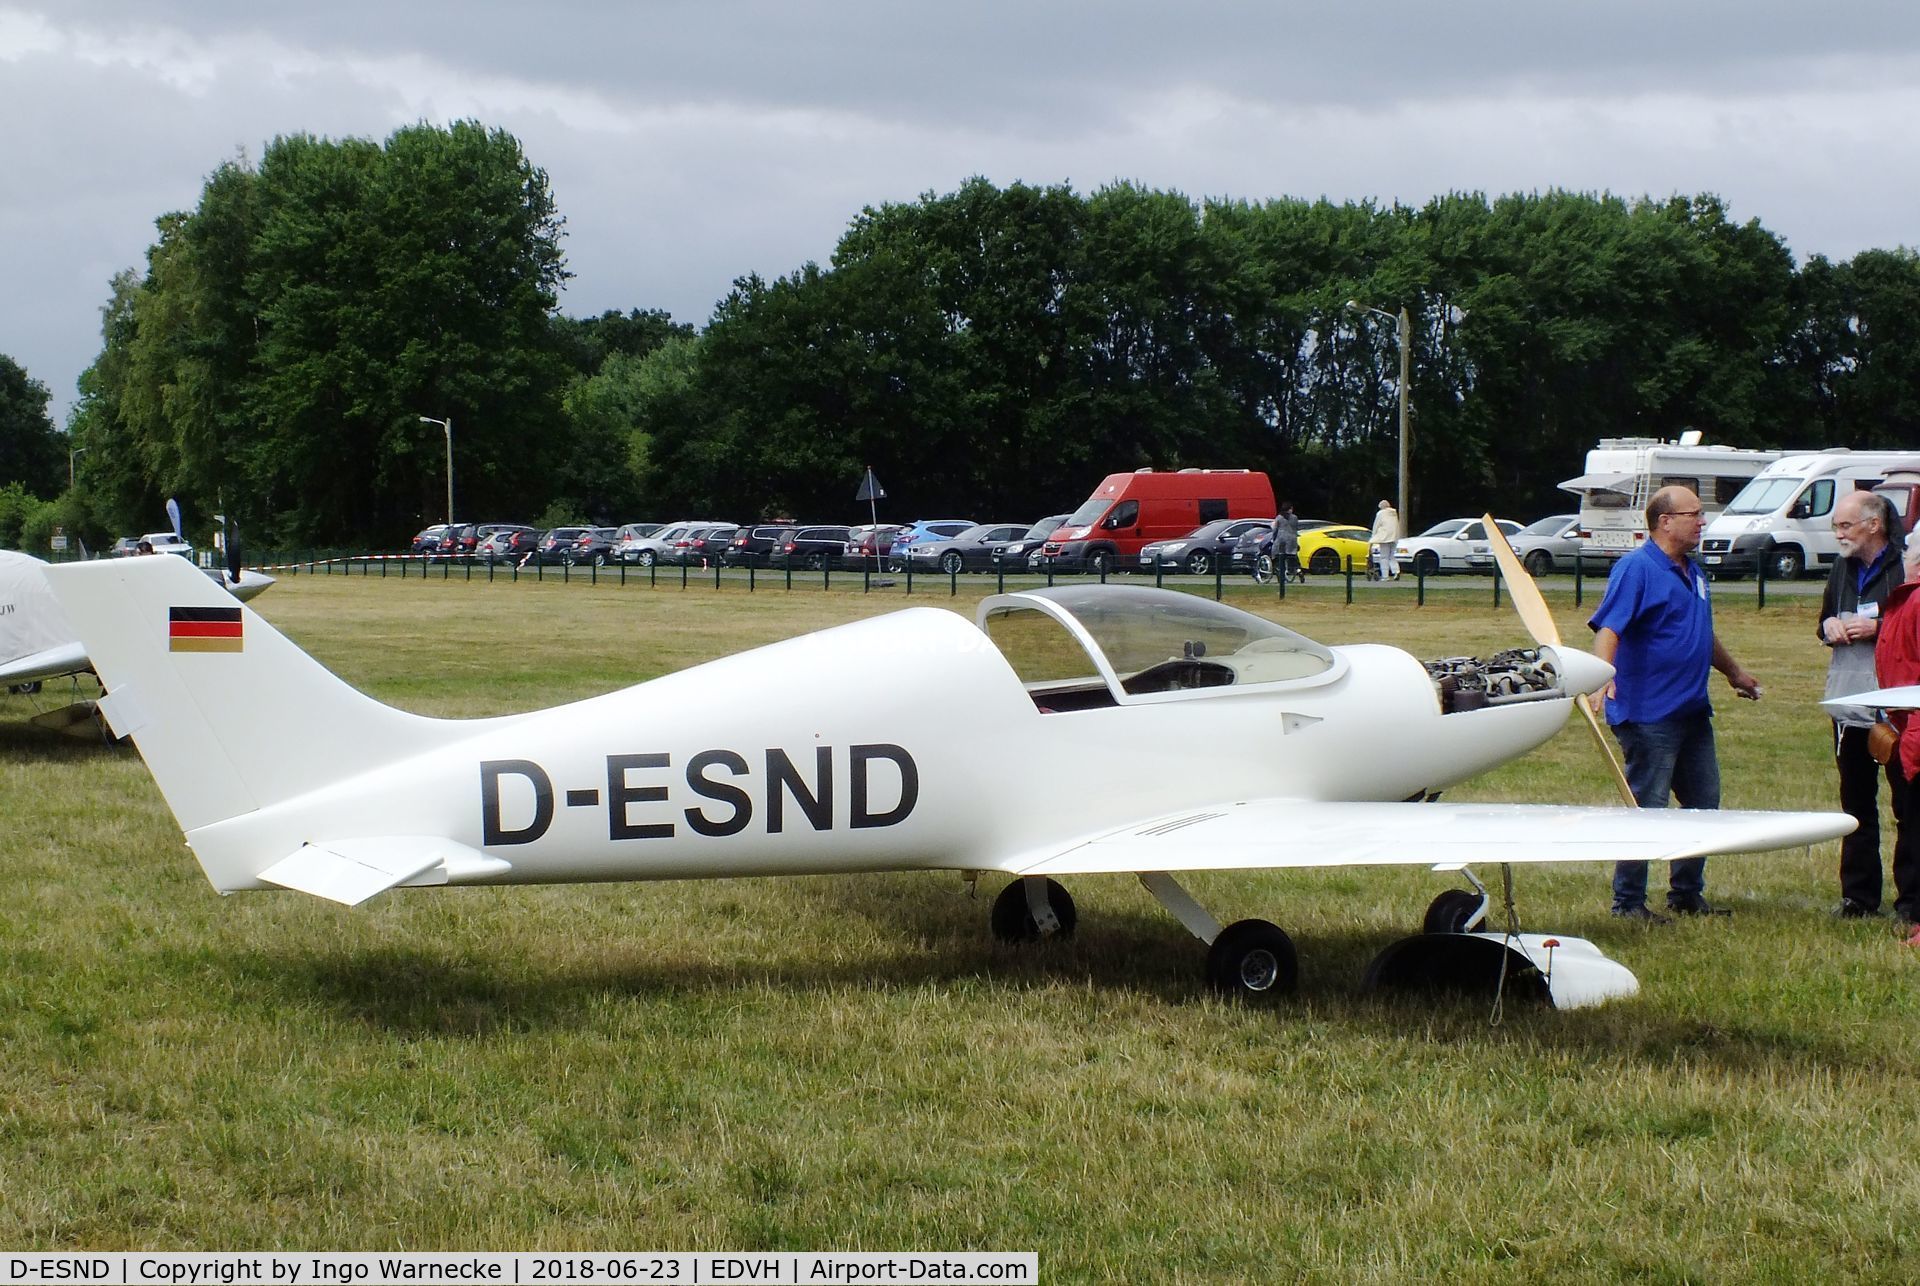 D-ESND, Aero Designs Pulsar XP C/N unknown_D-esnd, Aero Designs Pulsar XP at the 2018 OUV-Meeting at Hodenhagen airfield